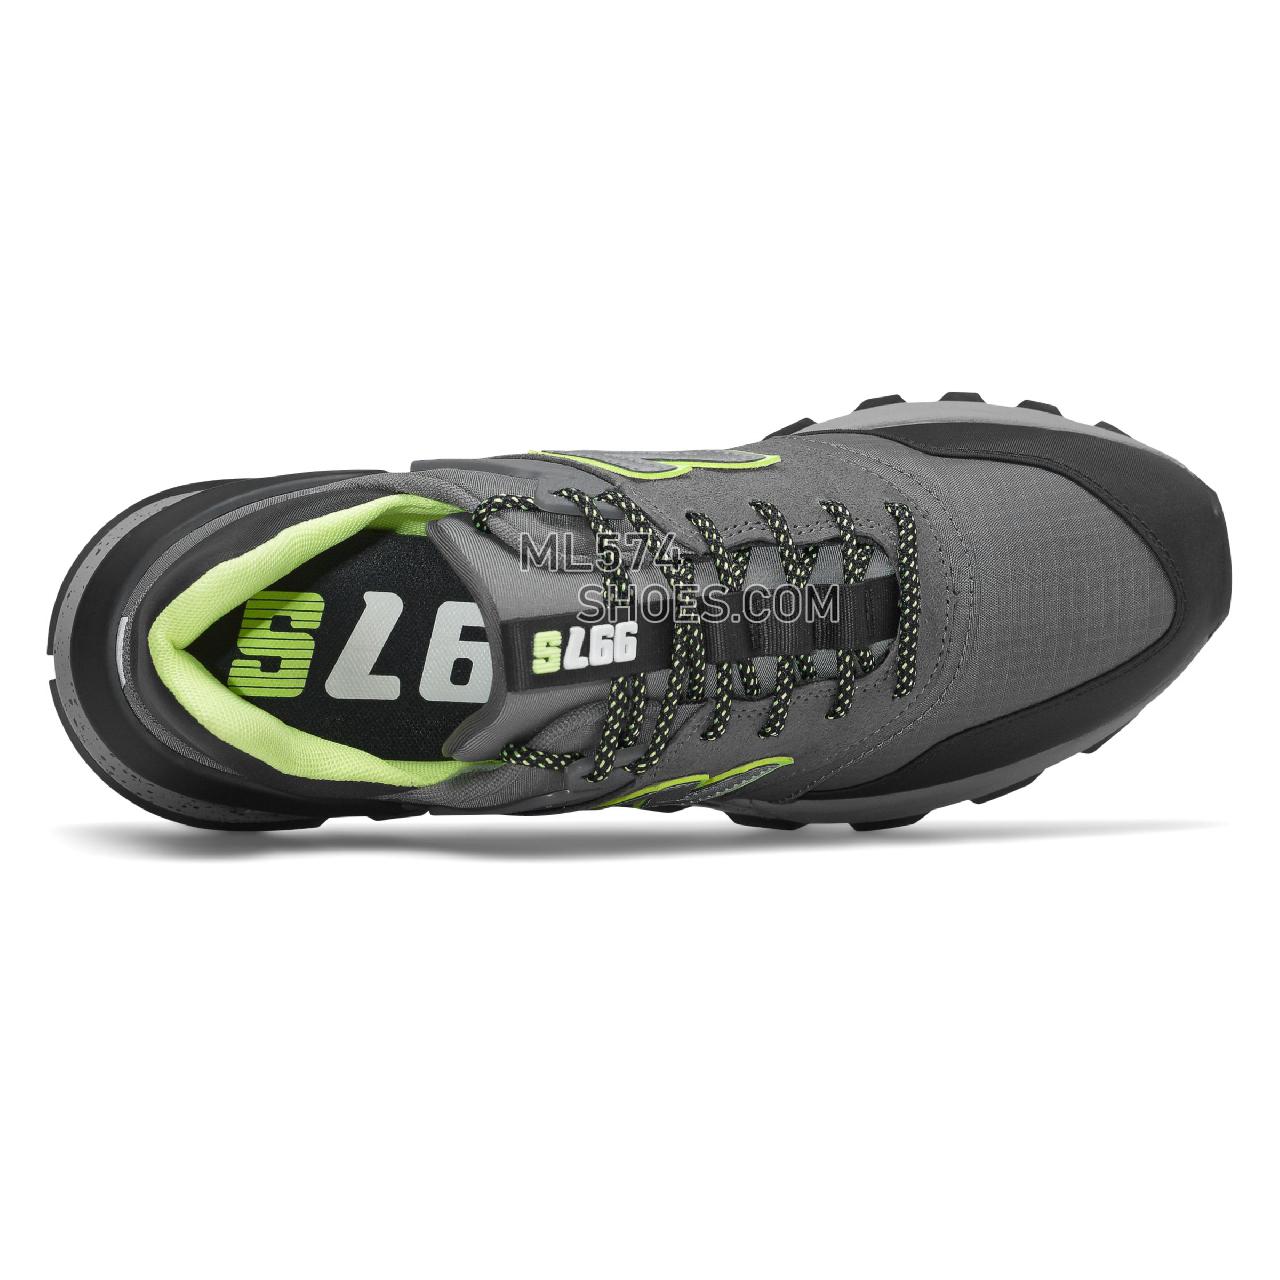 New Balance 997 Sport - Men's Sport Style Sneakers - Castlerock with Black and Lemon Slush - MS997SKC